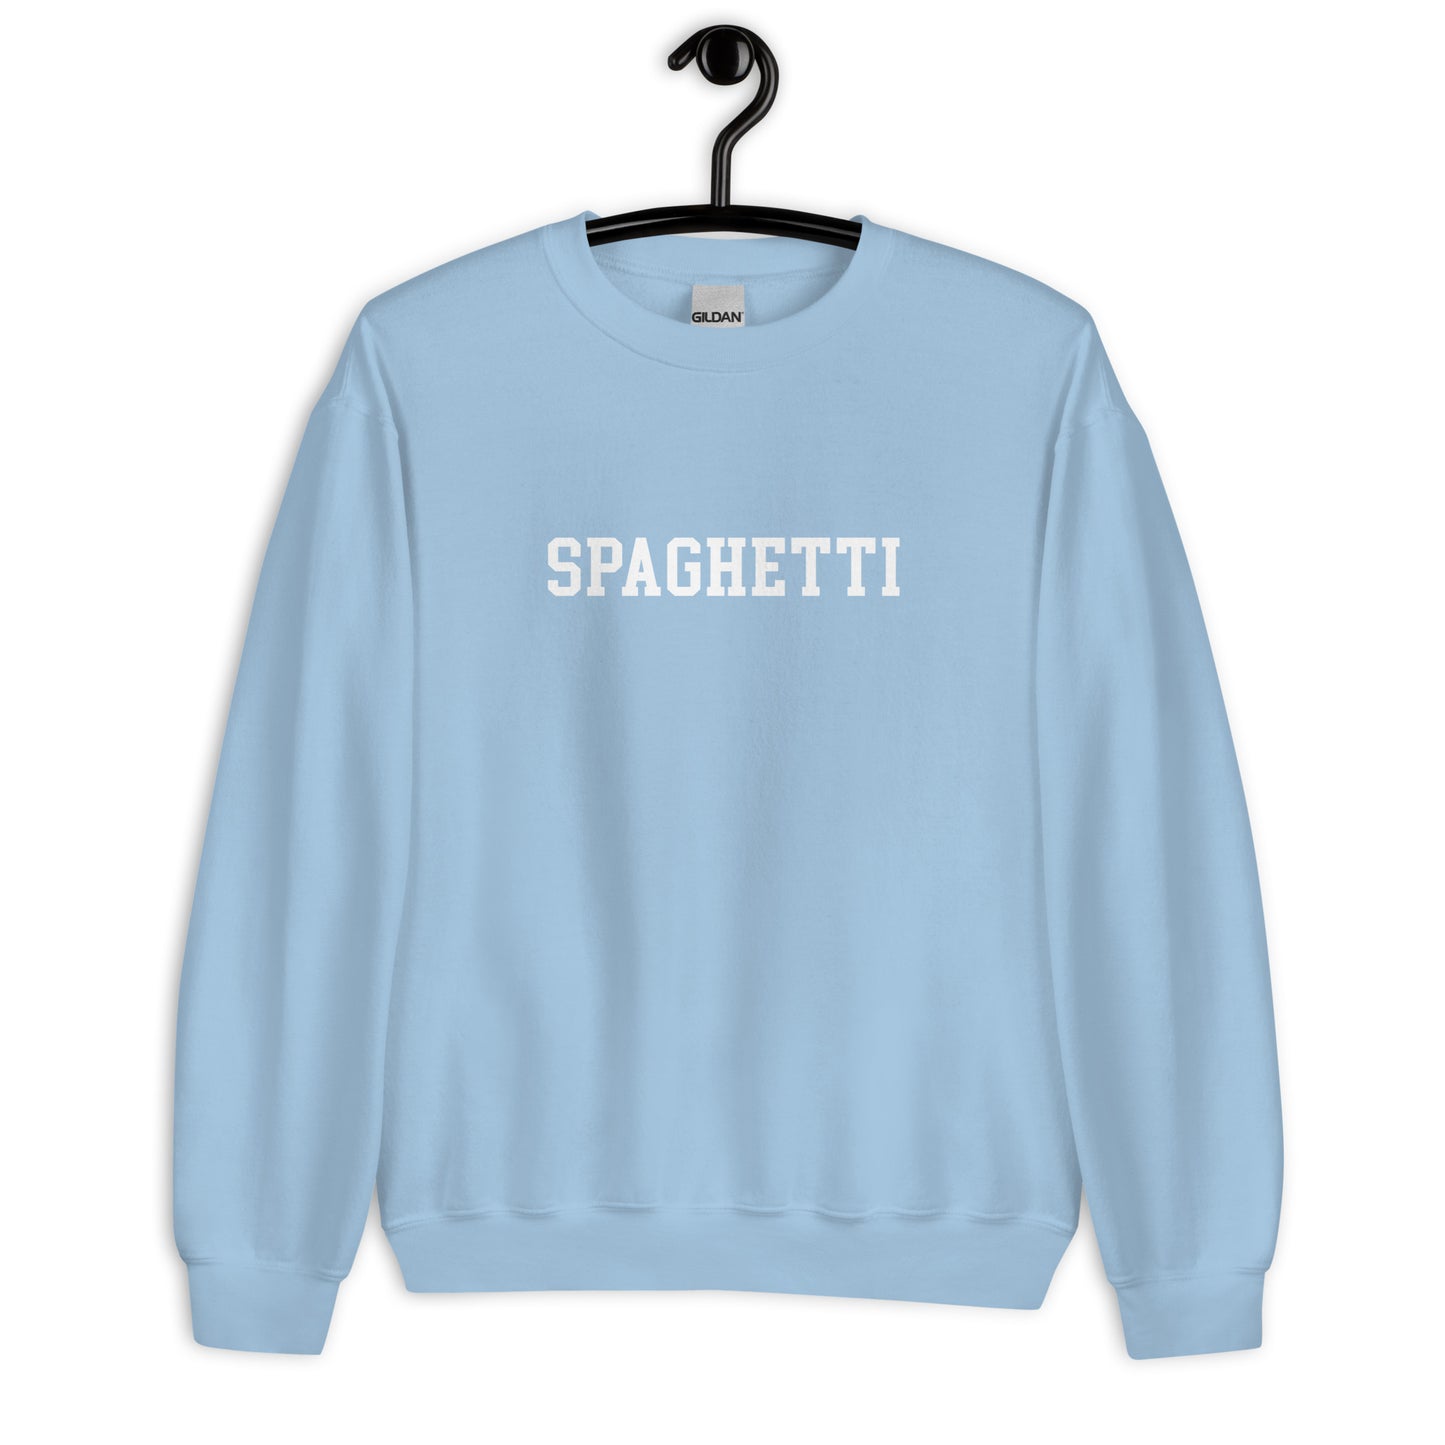 Spaghetti Sweatshirt - Straight Font